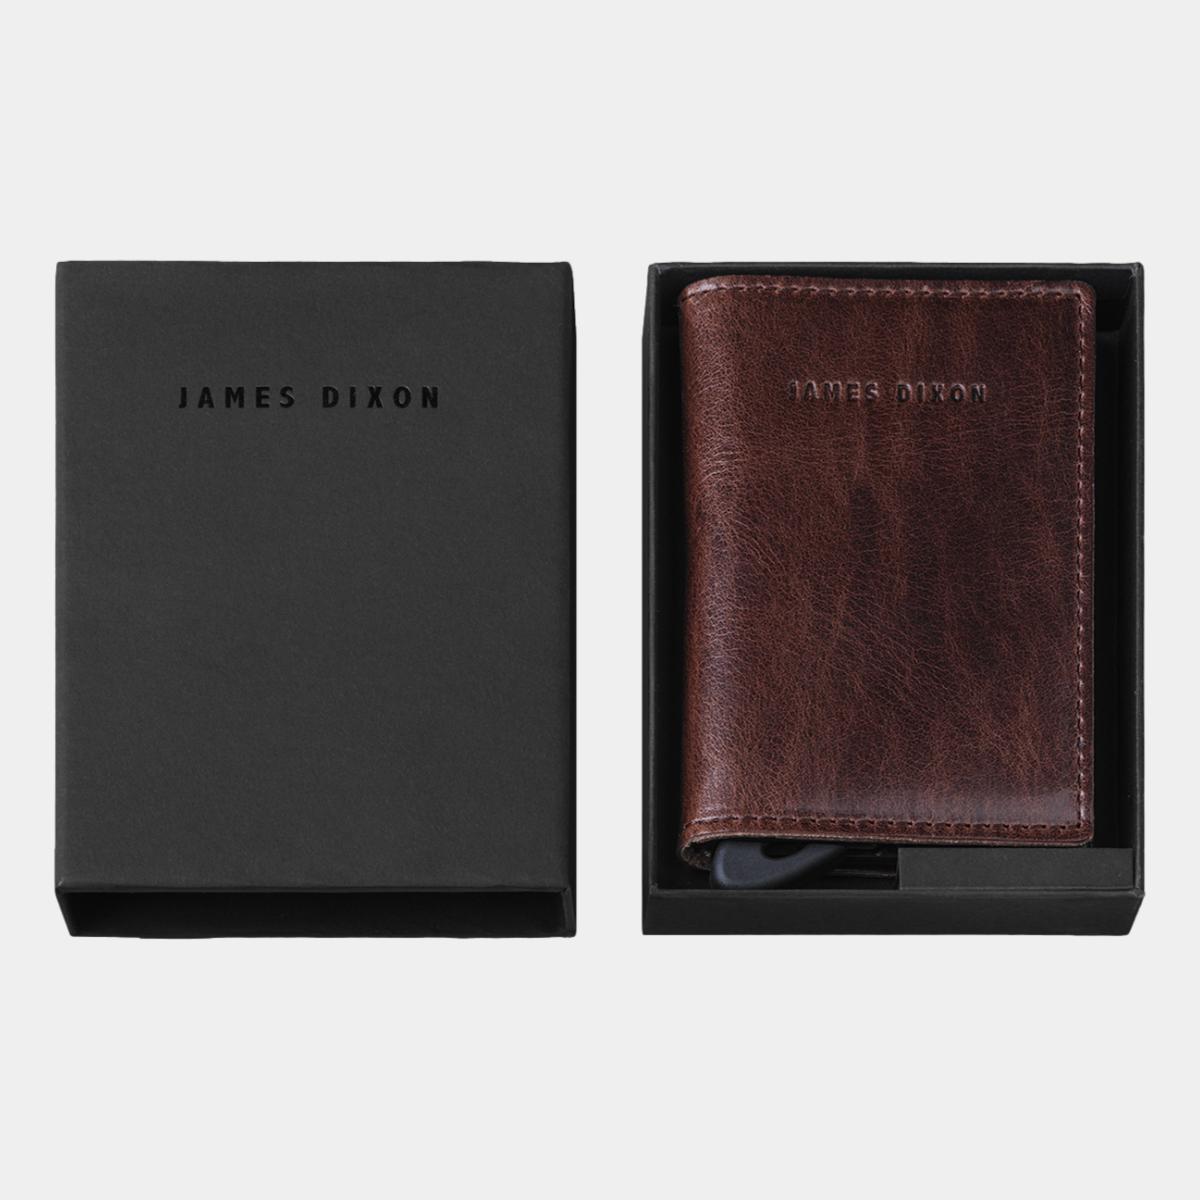 jd0049 james dixon puro classic cacao brown coin pocket wallet box